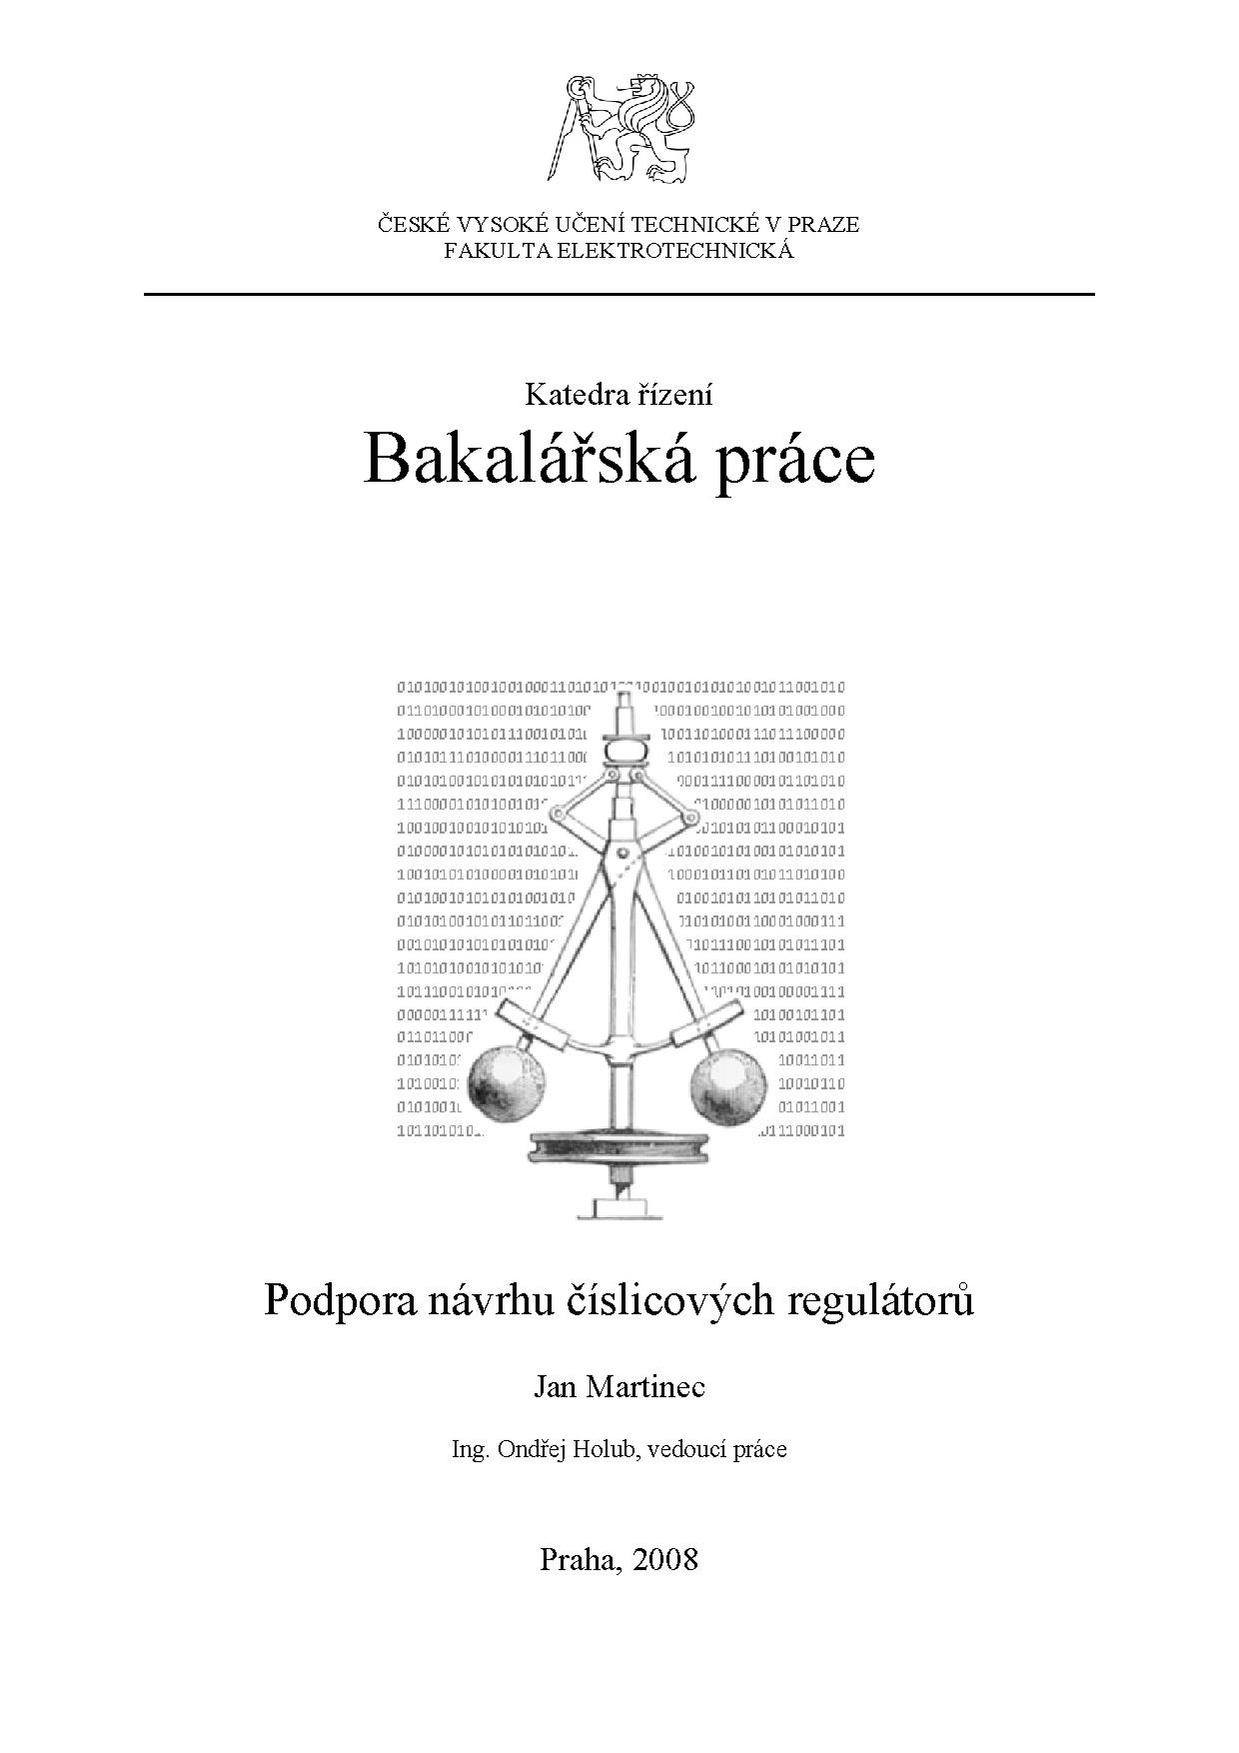 Bp 2008 martinec jan.pdf